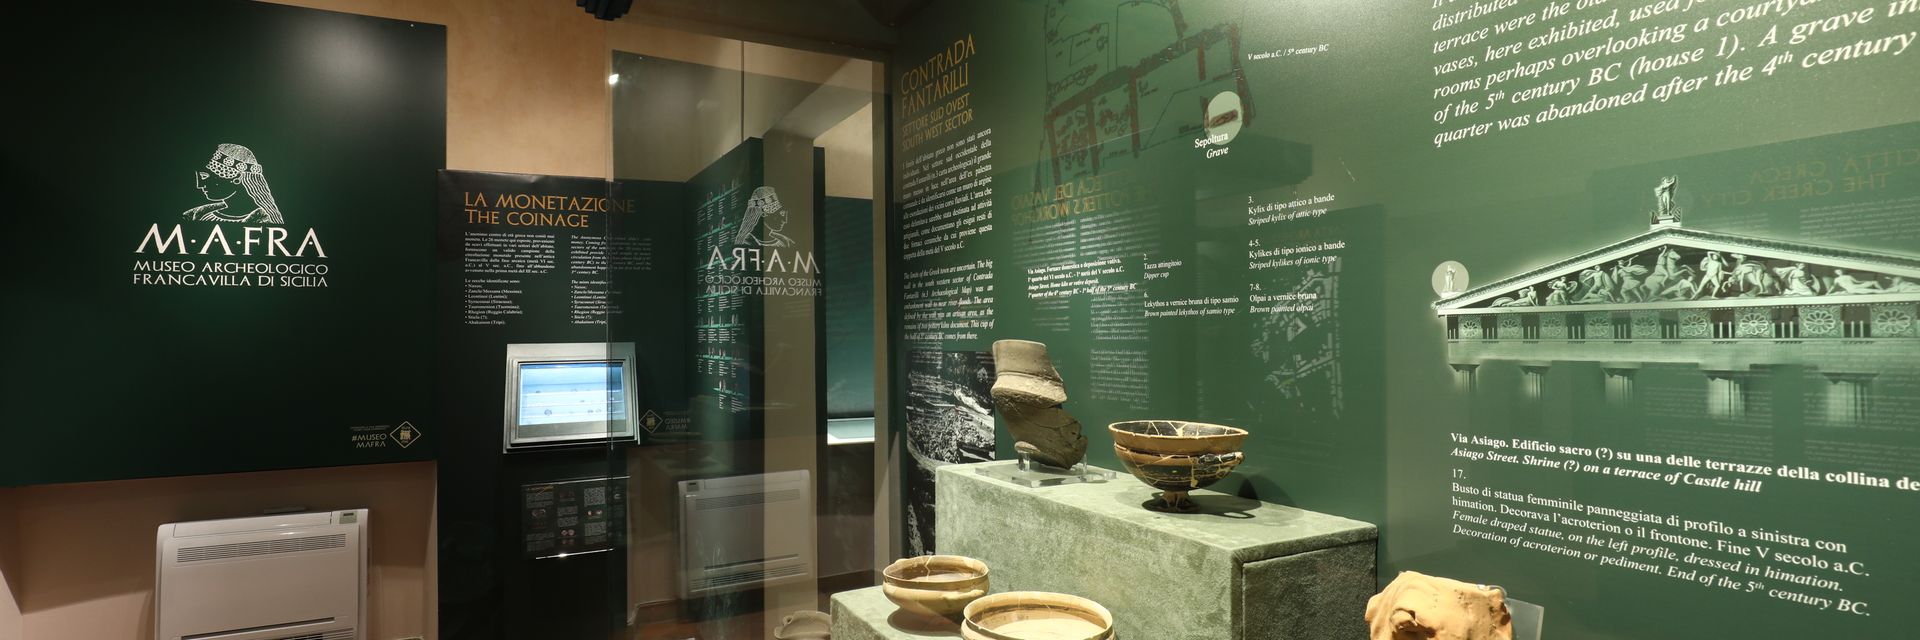 MAFRA - Archaeological Museum of Francavilla di Sicilia